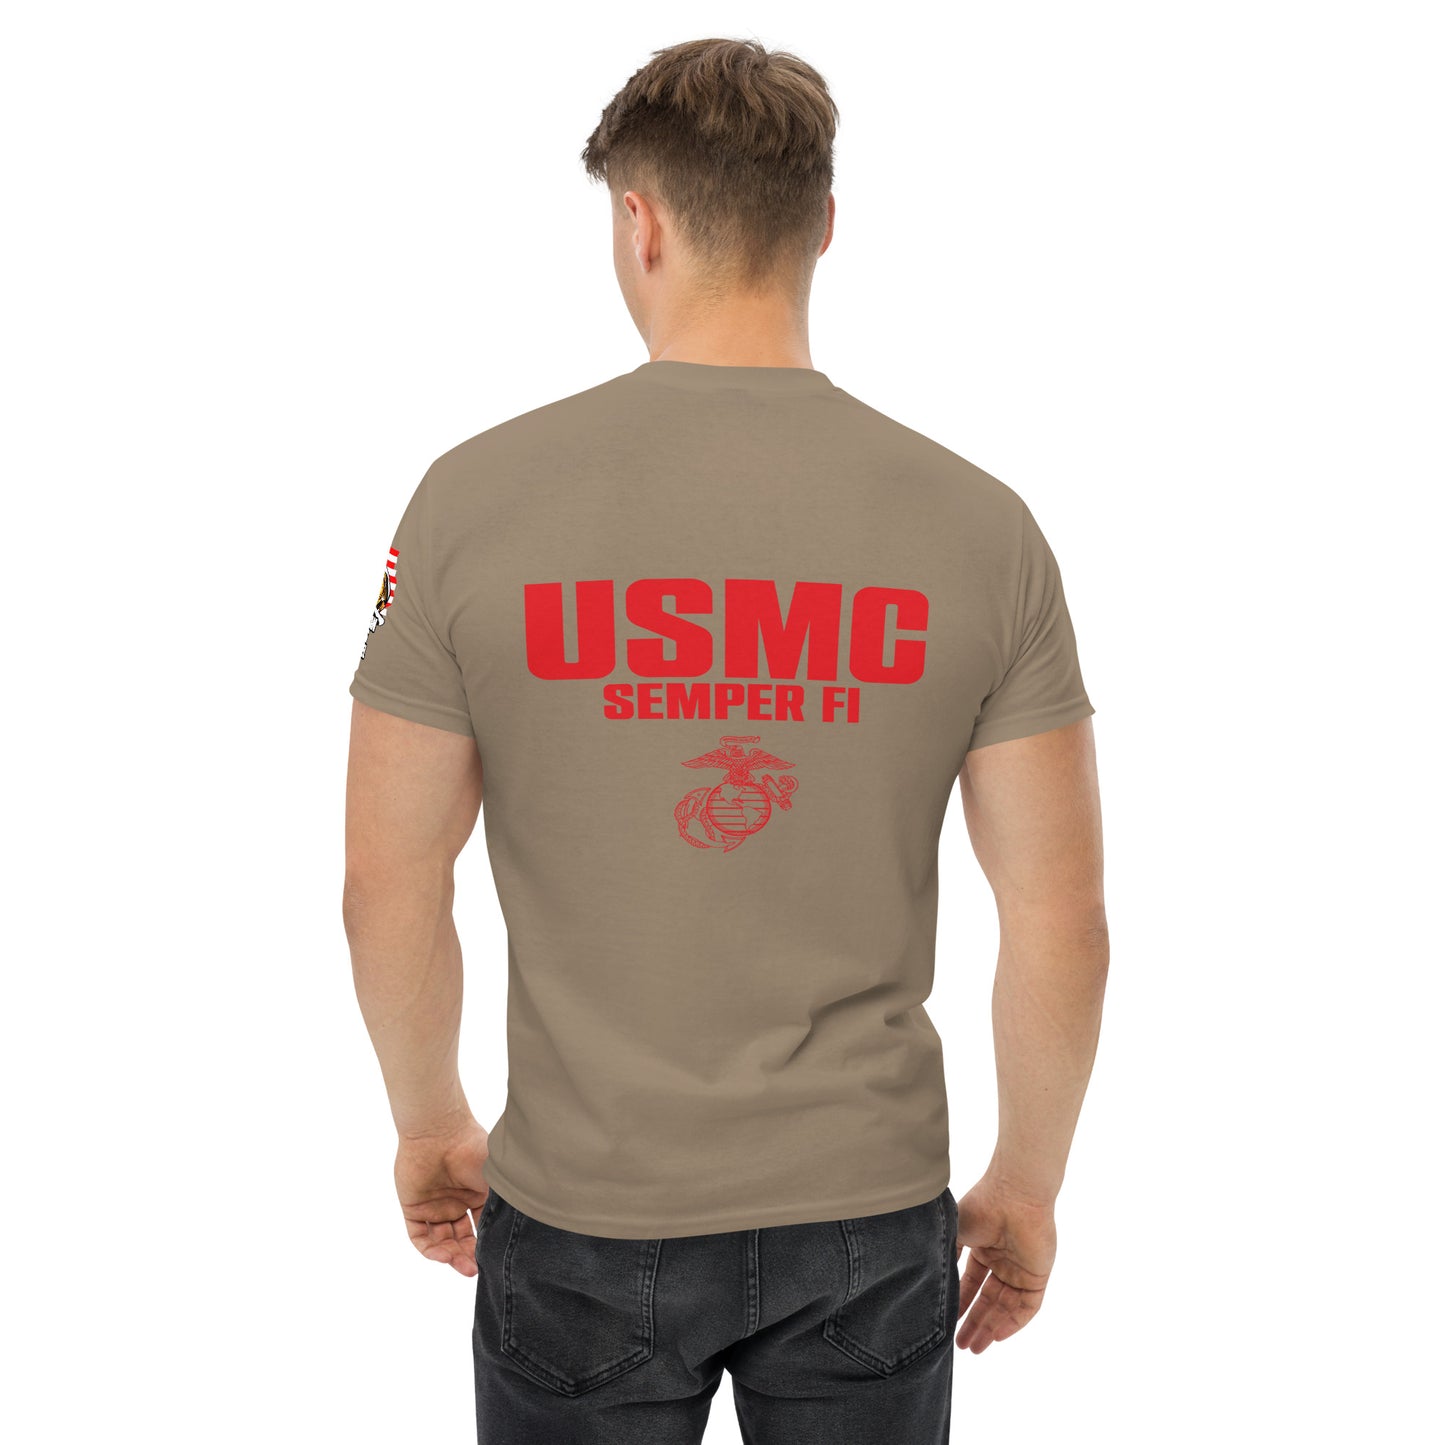 USMC-Semper Fi